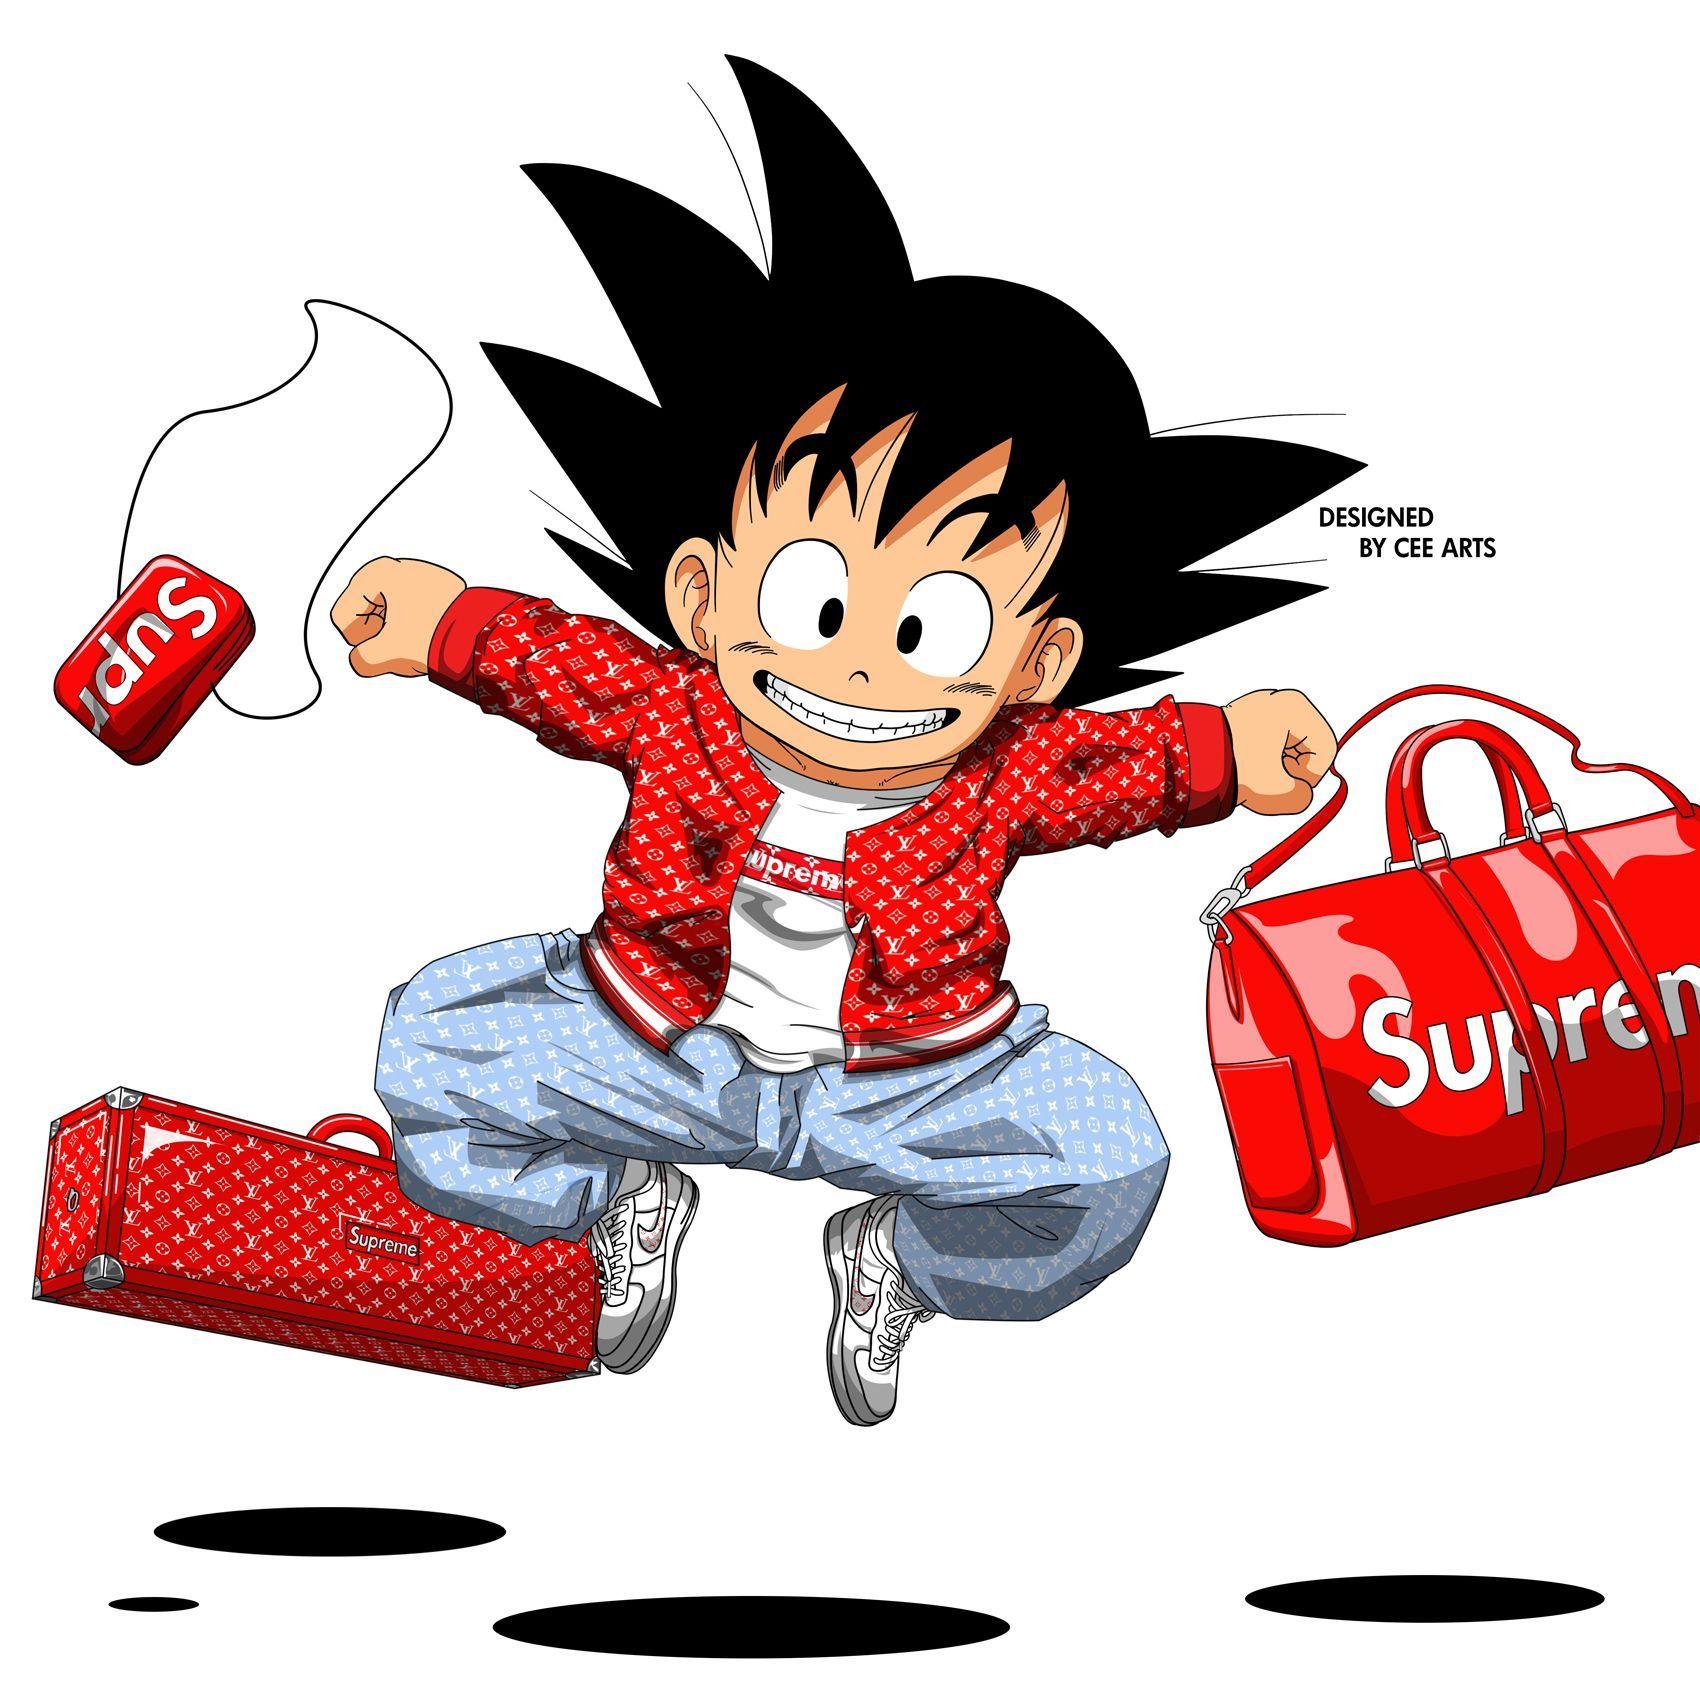 Goku x Supreme x Louis Vuitton